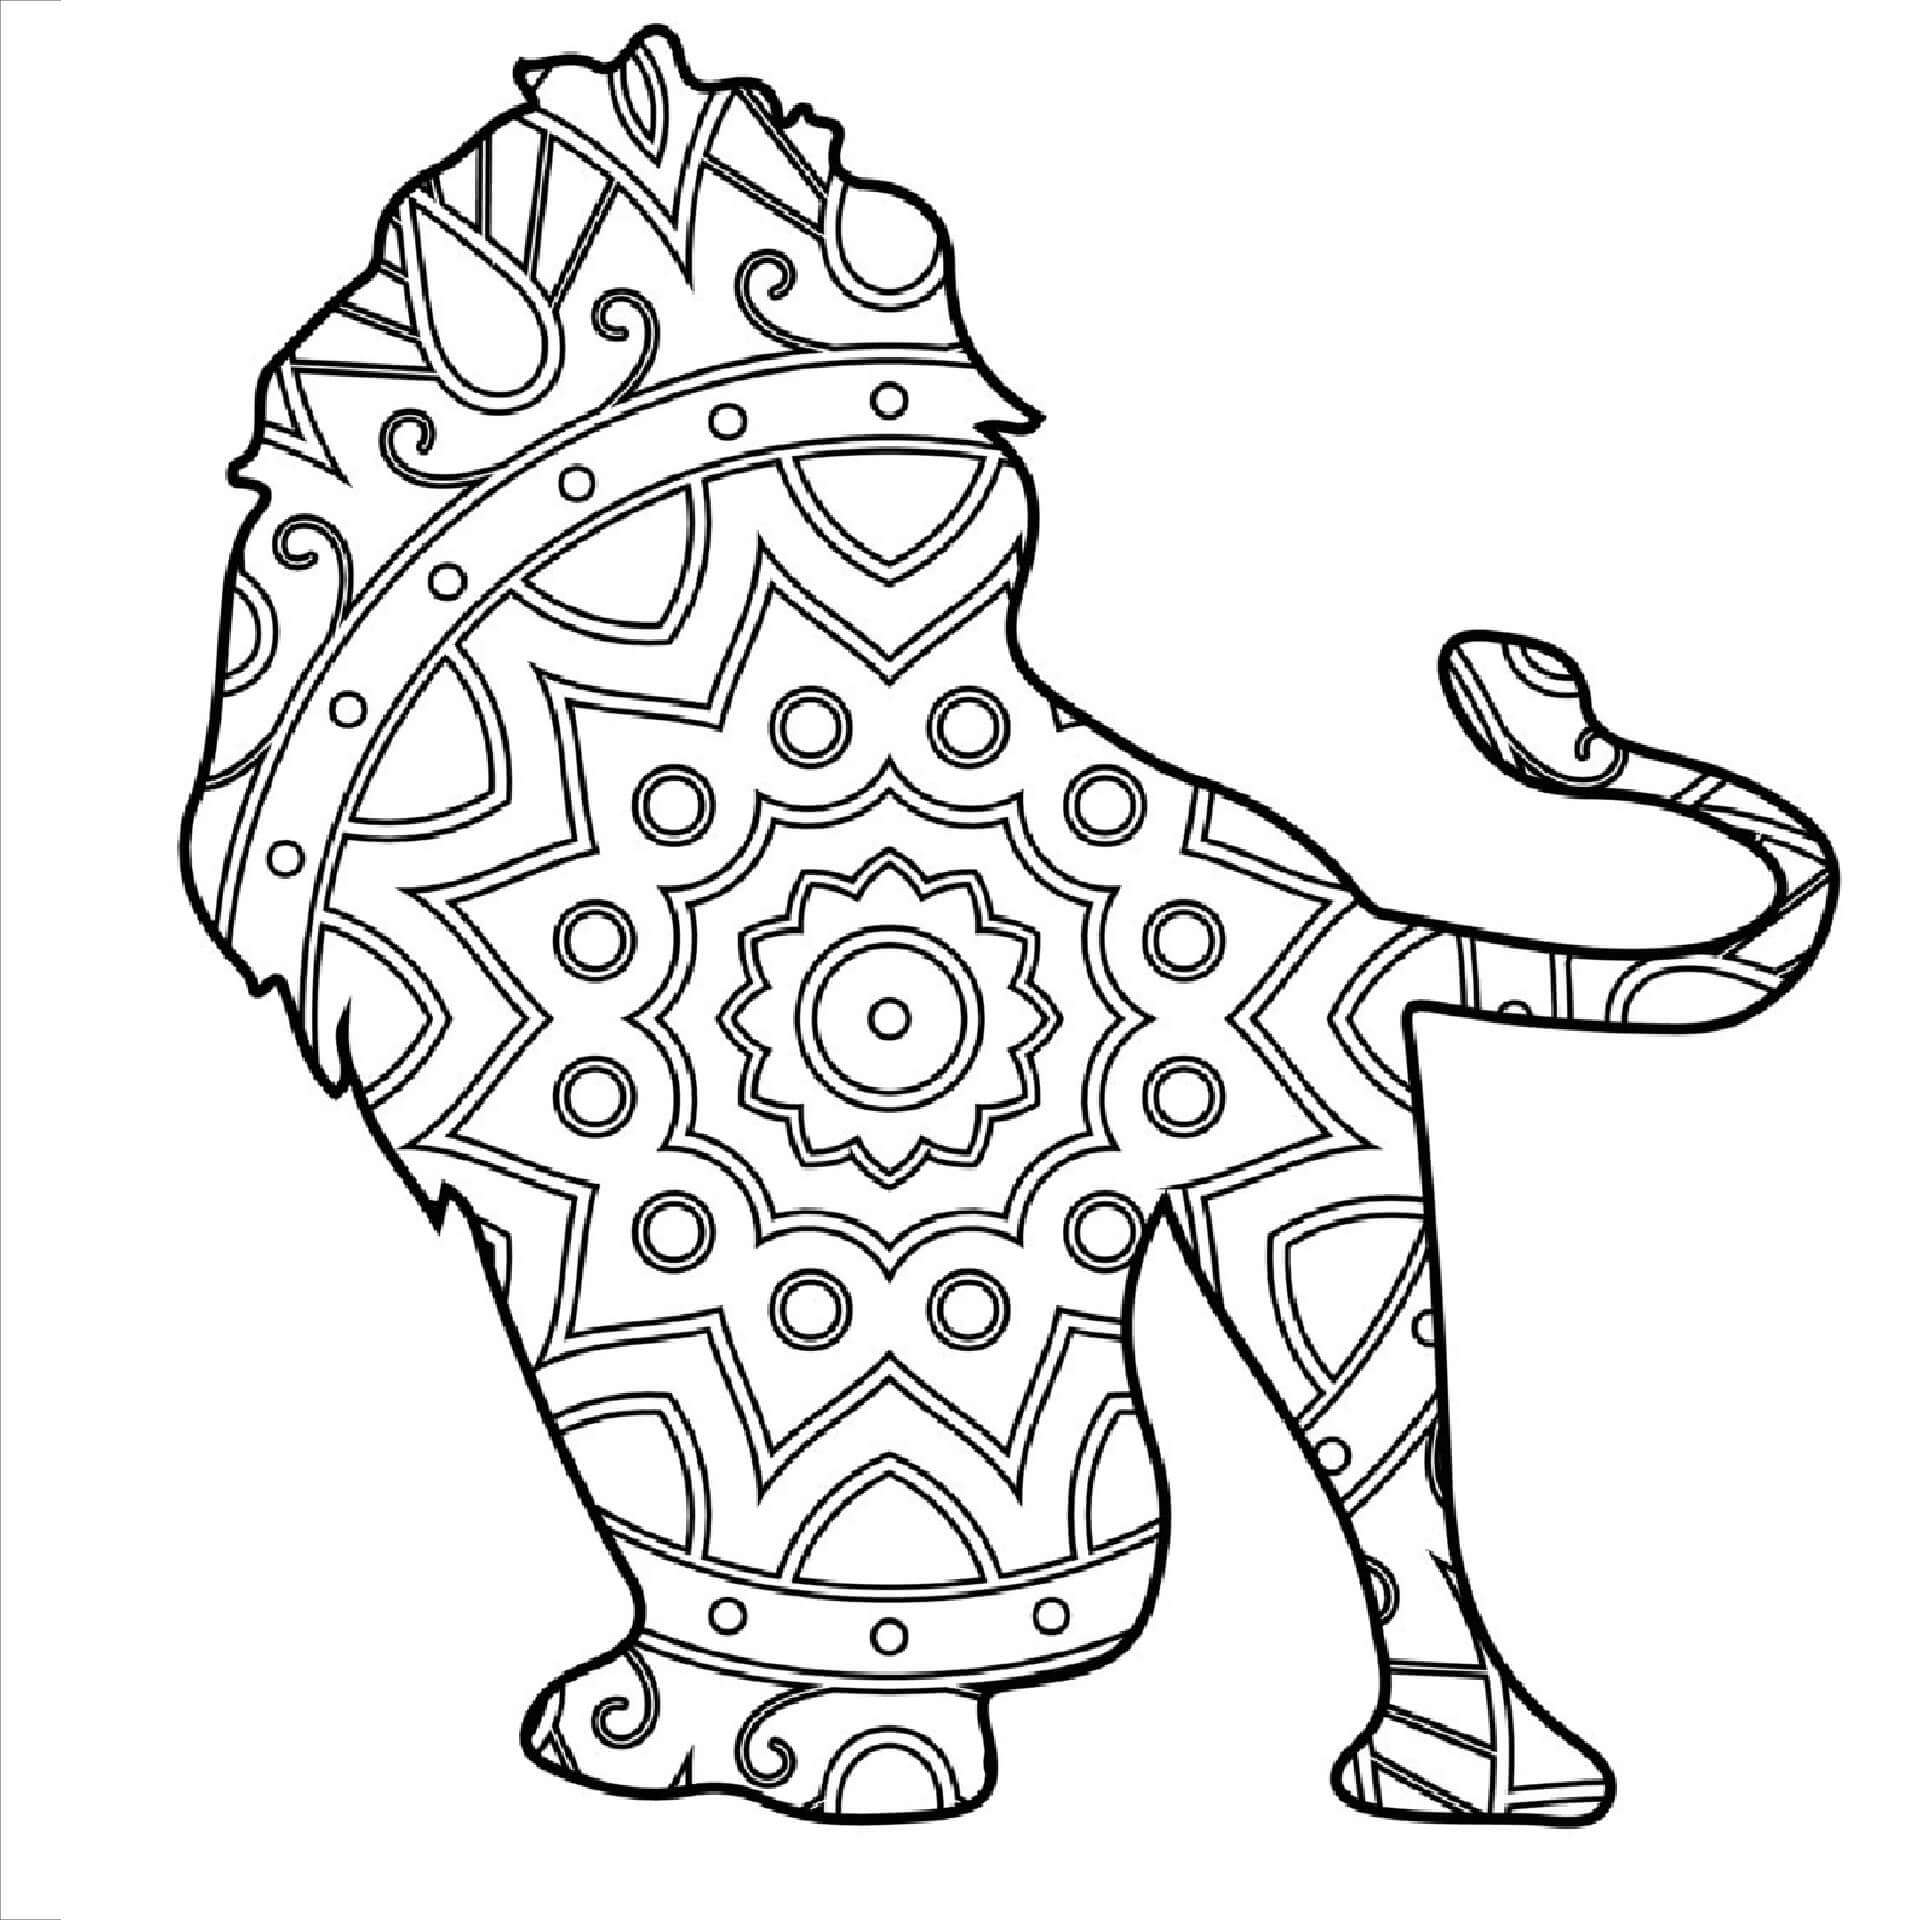 Mandala Lion Coloring Page - Sheet 5 Mandalas